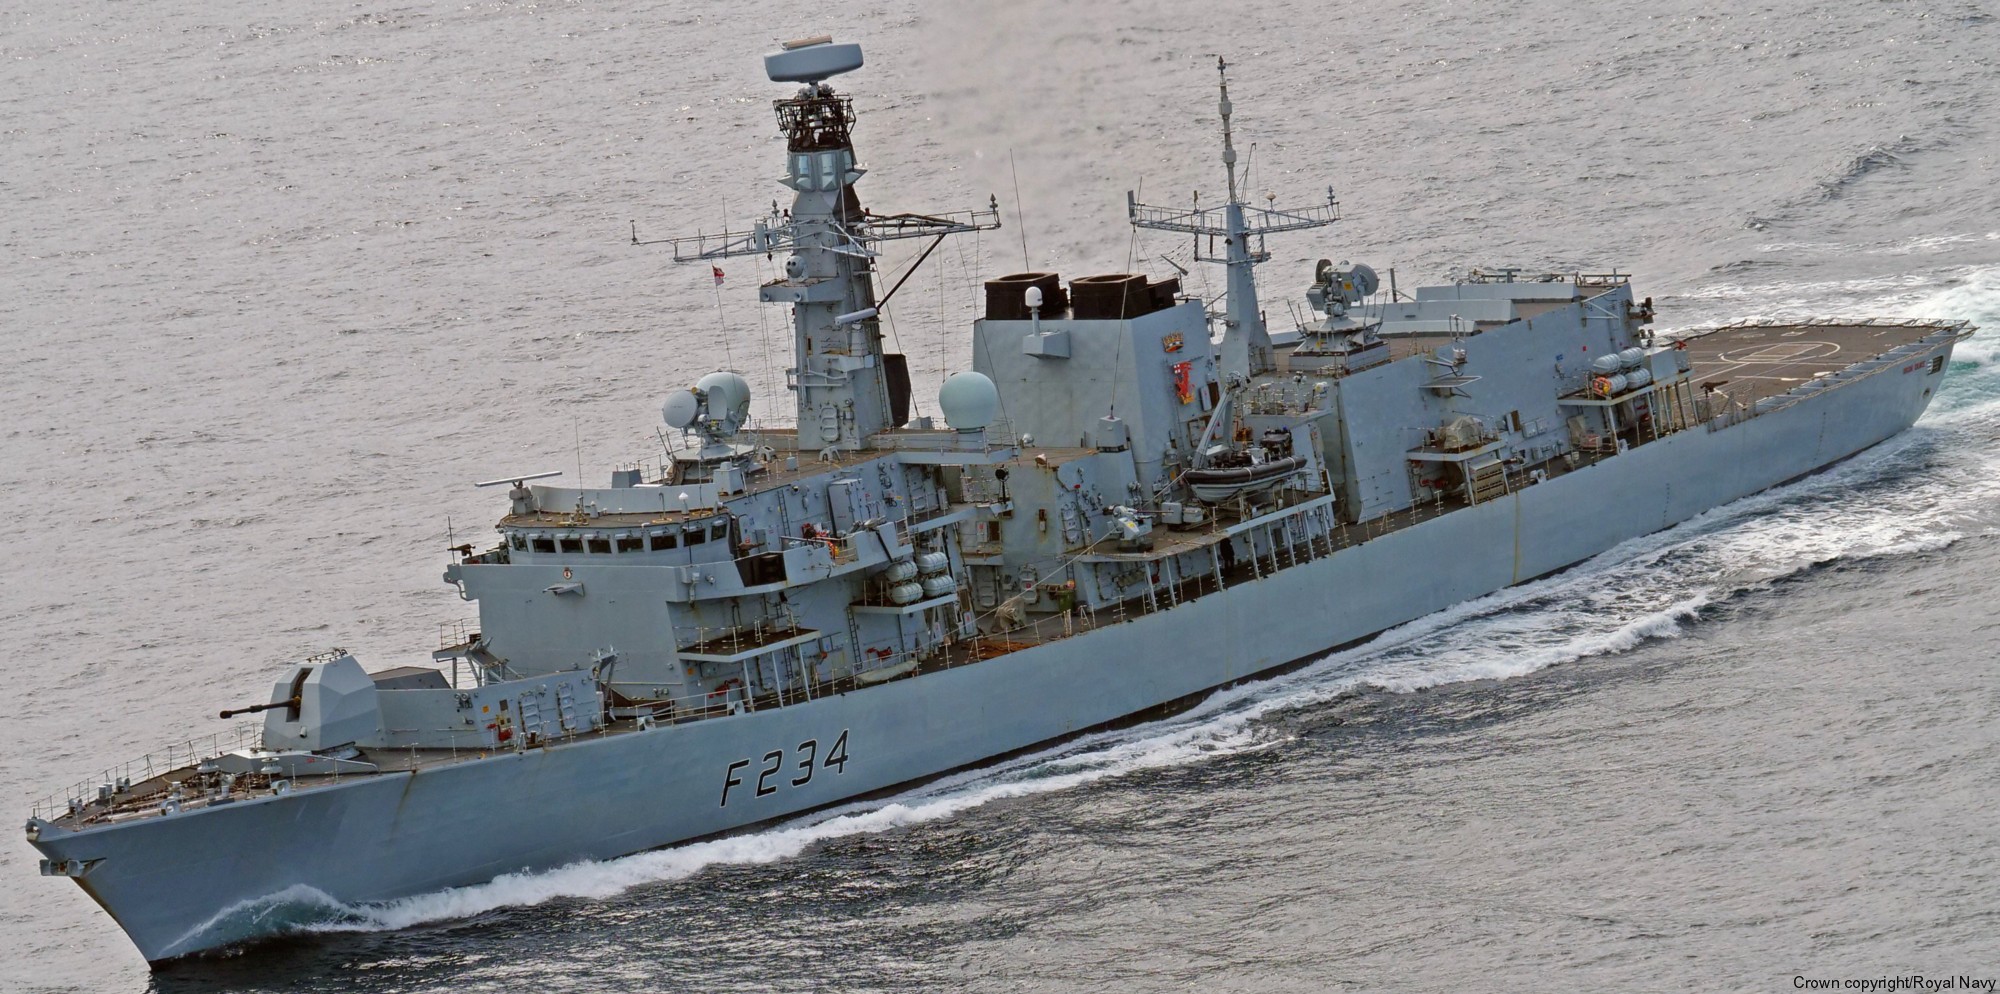 f-234 hms iron duke type 23 duke class guided missile frigate royal navy 23